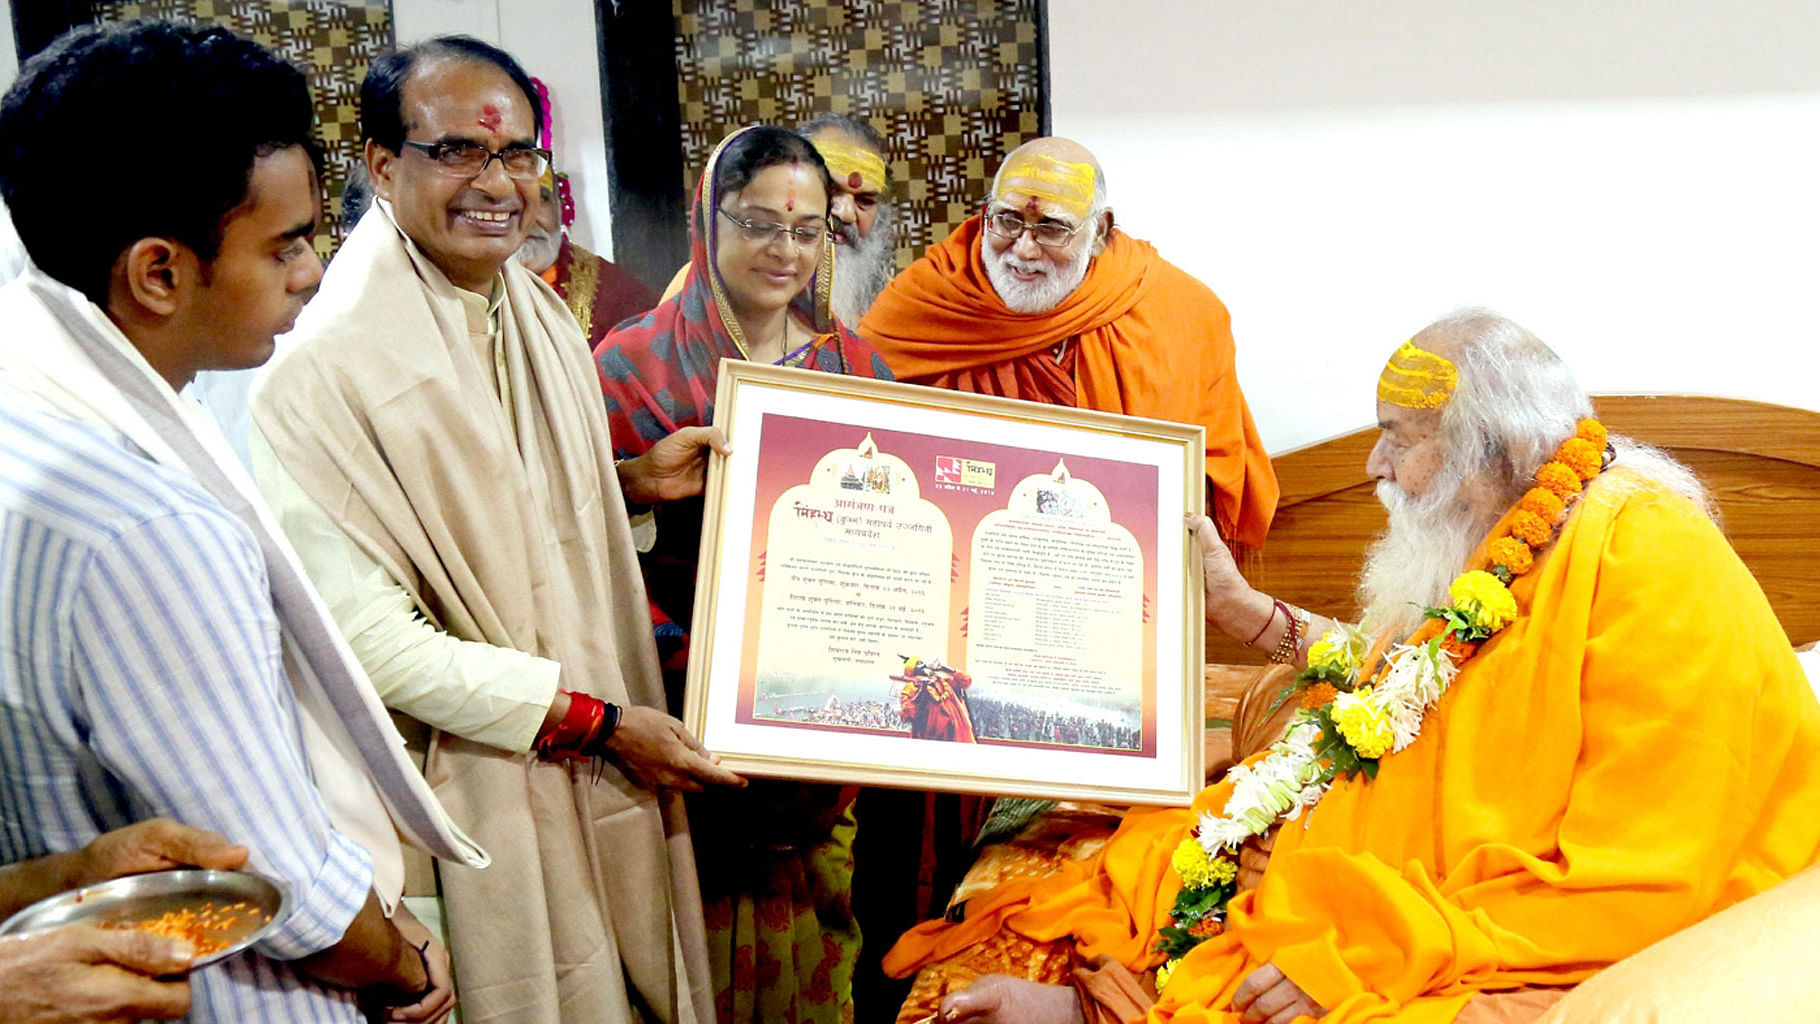 File photo of Shankaracharya with Madhya Pradesh Chief Minister in Nashik. (Photo: IANS)